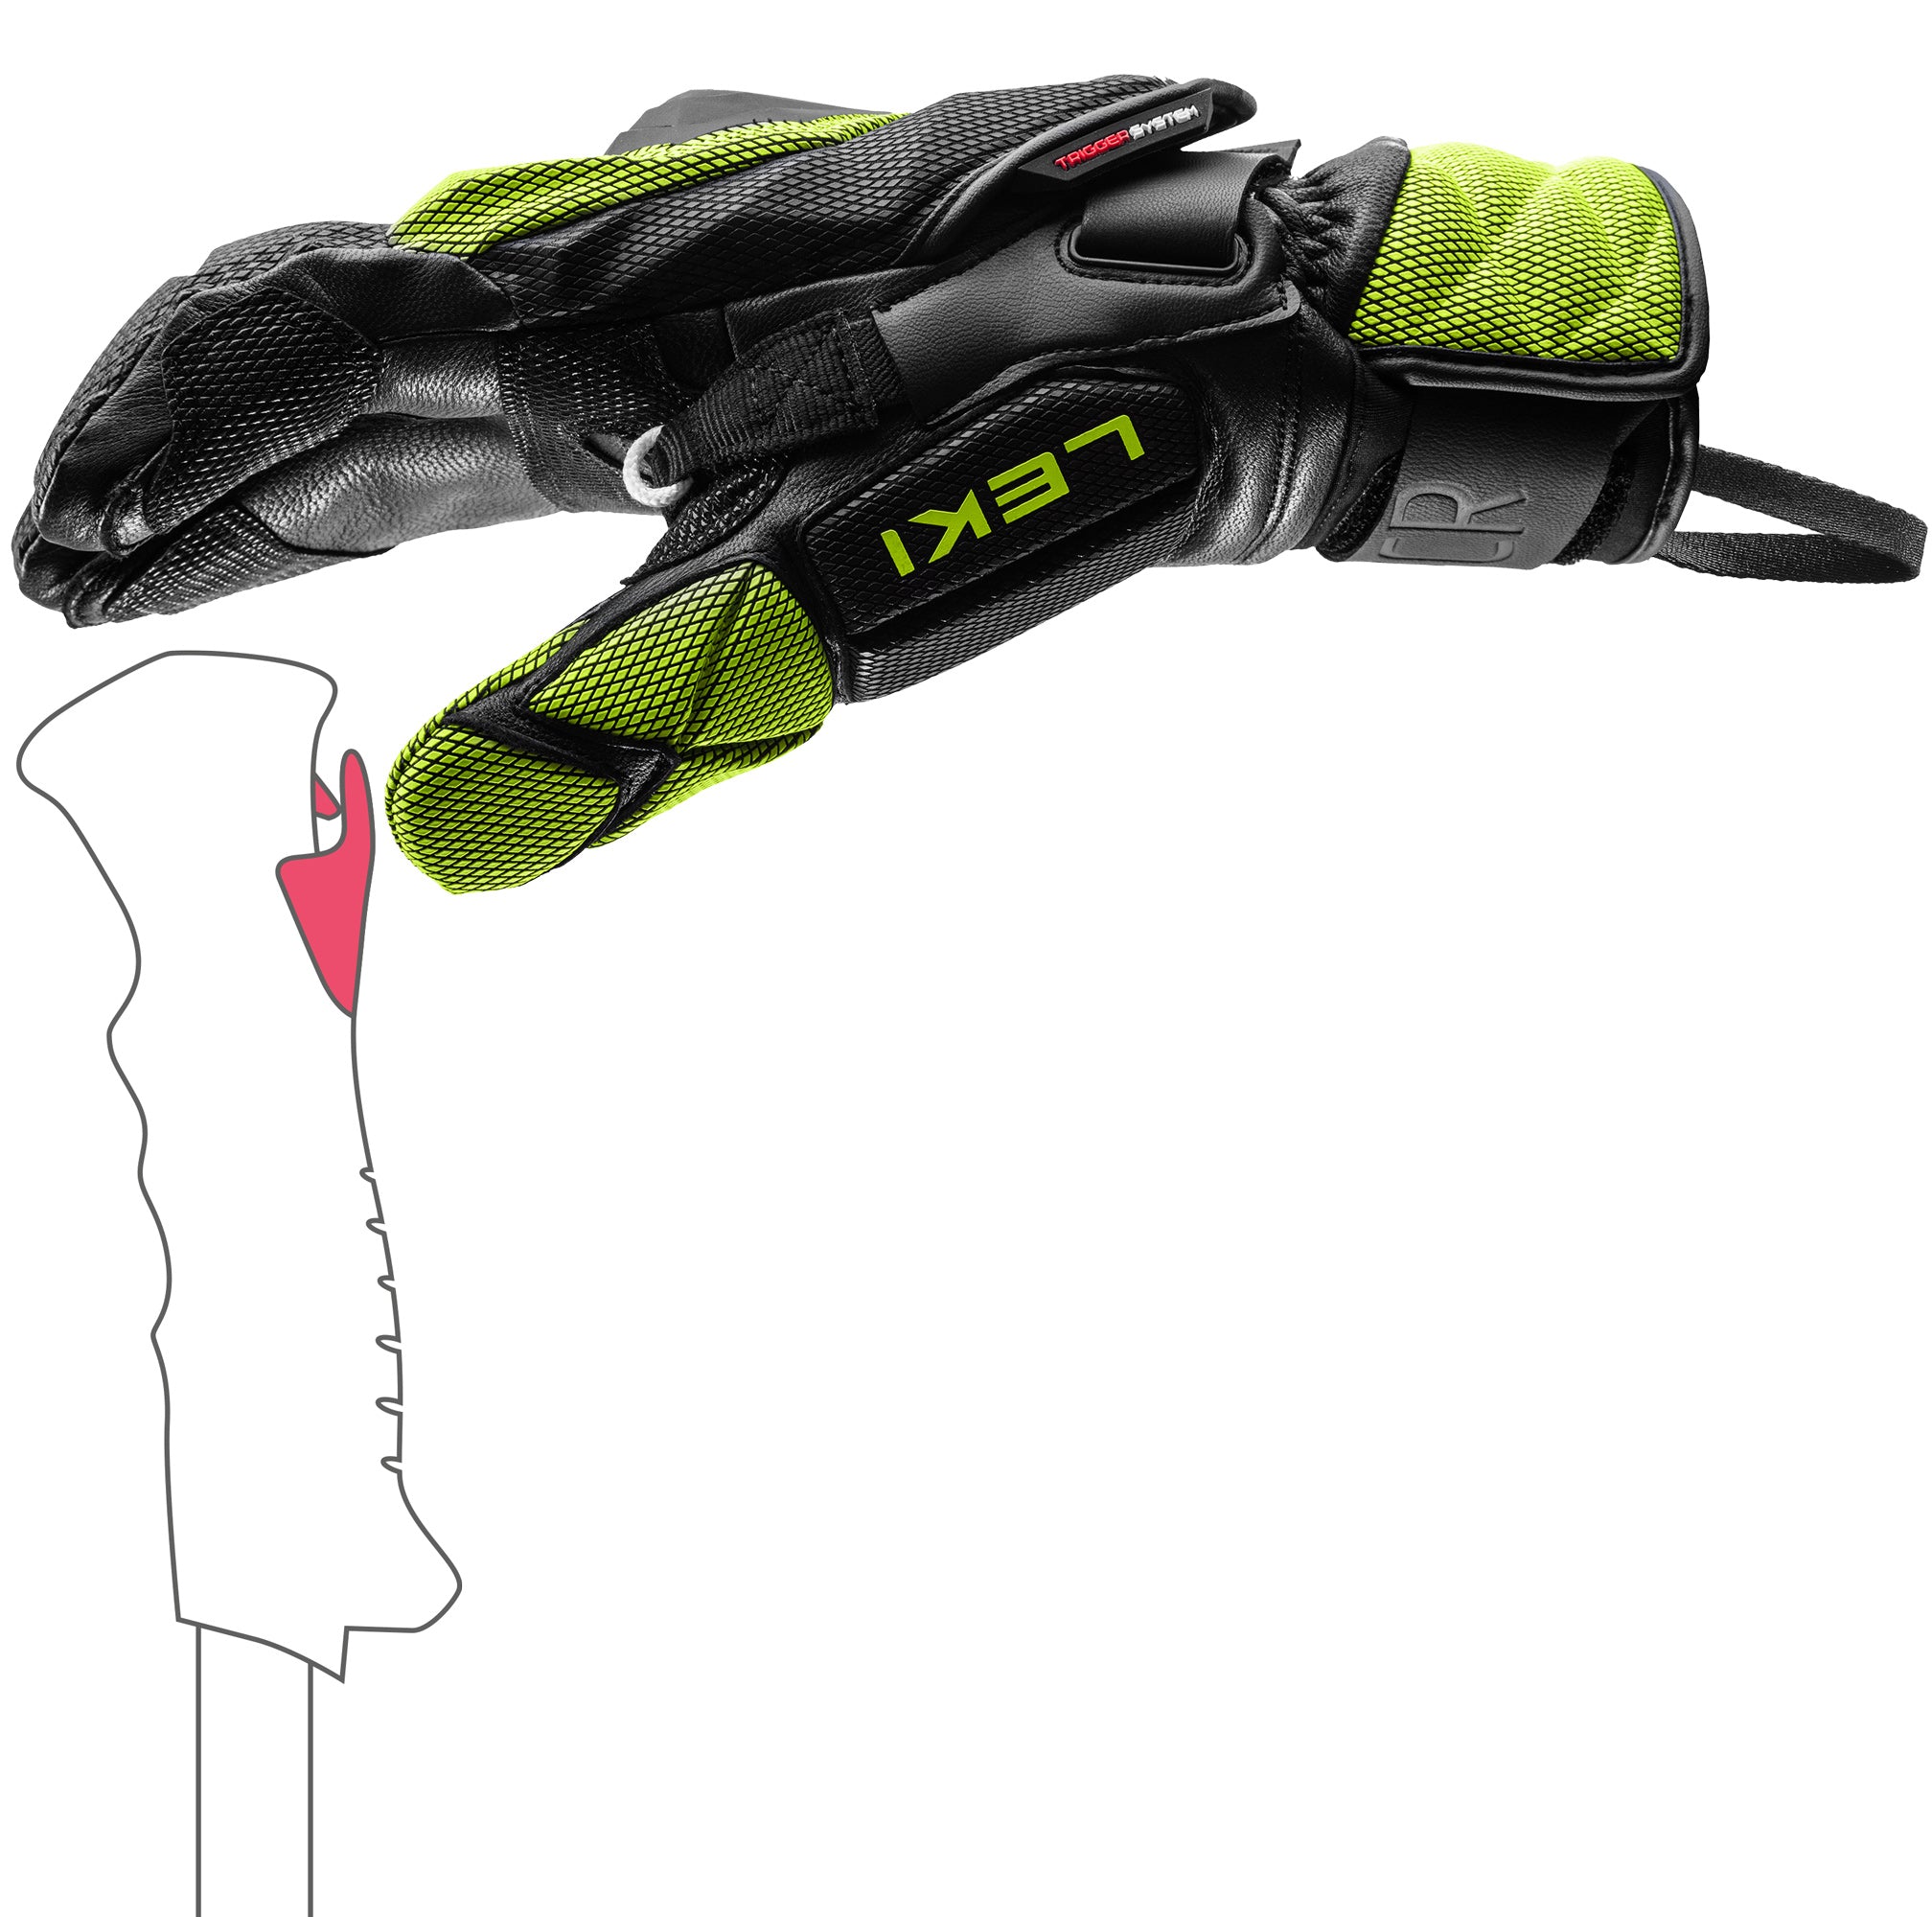 LEKI USA - WCR VENOM GS 3D LOBSTER - Ski Racing Gloves - Apparel &  Accessories - LEKI USA